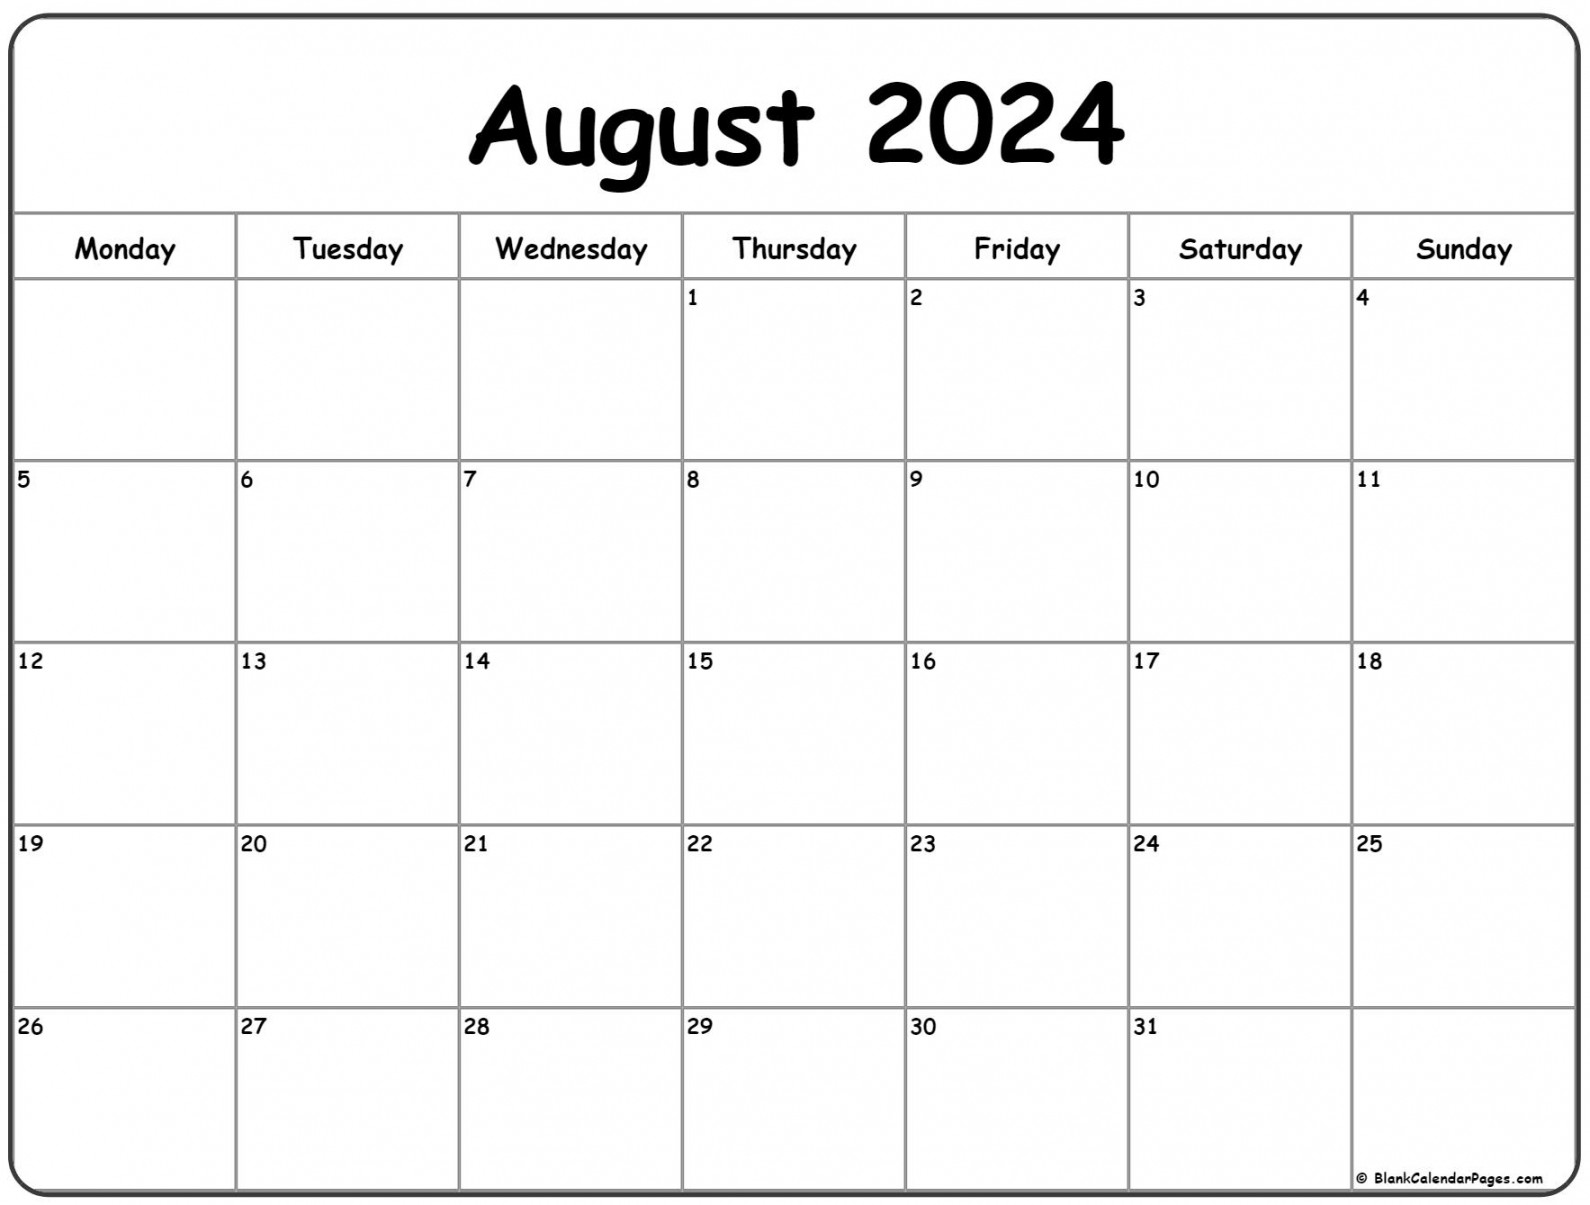 august monday calendar monday to sunday 1